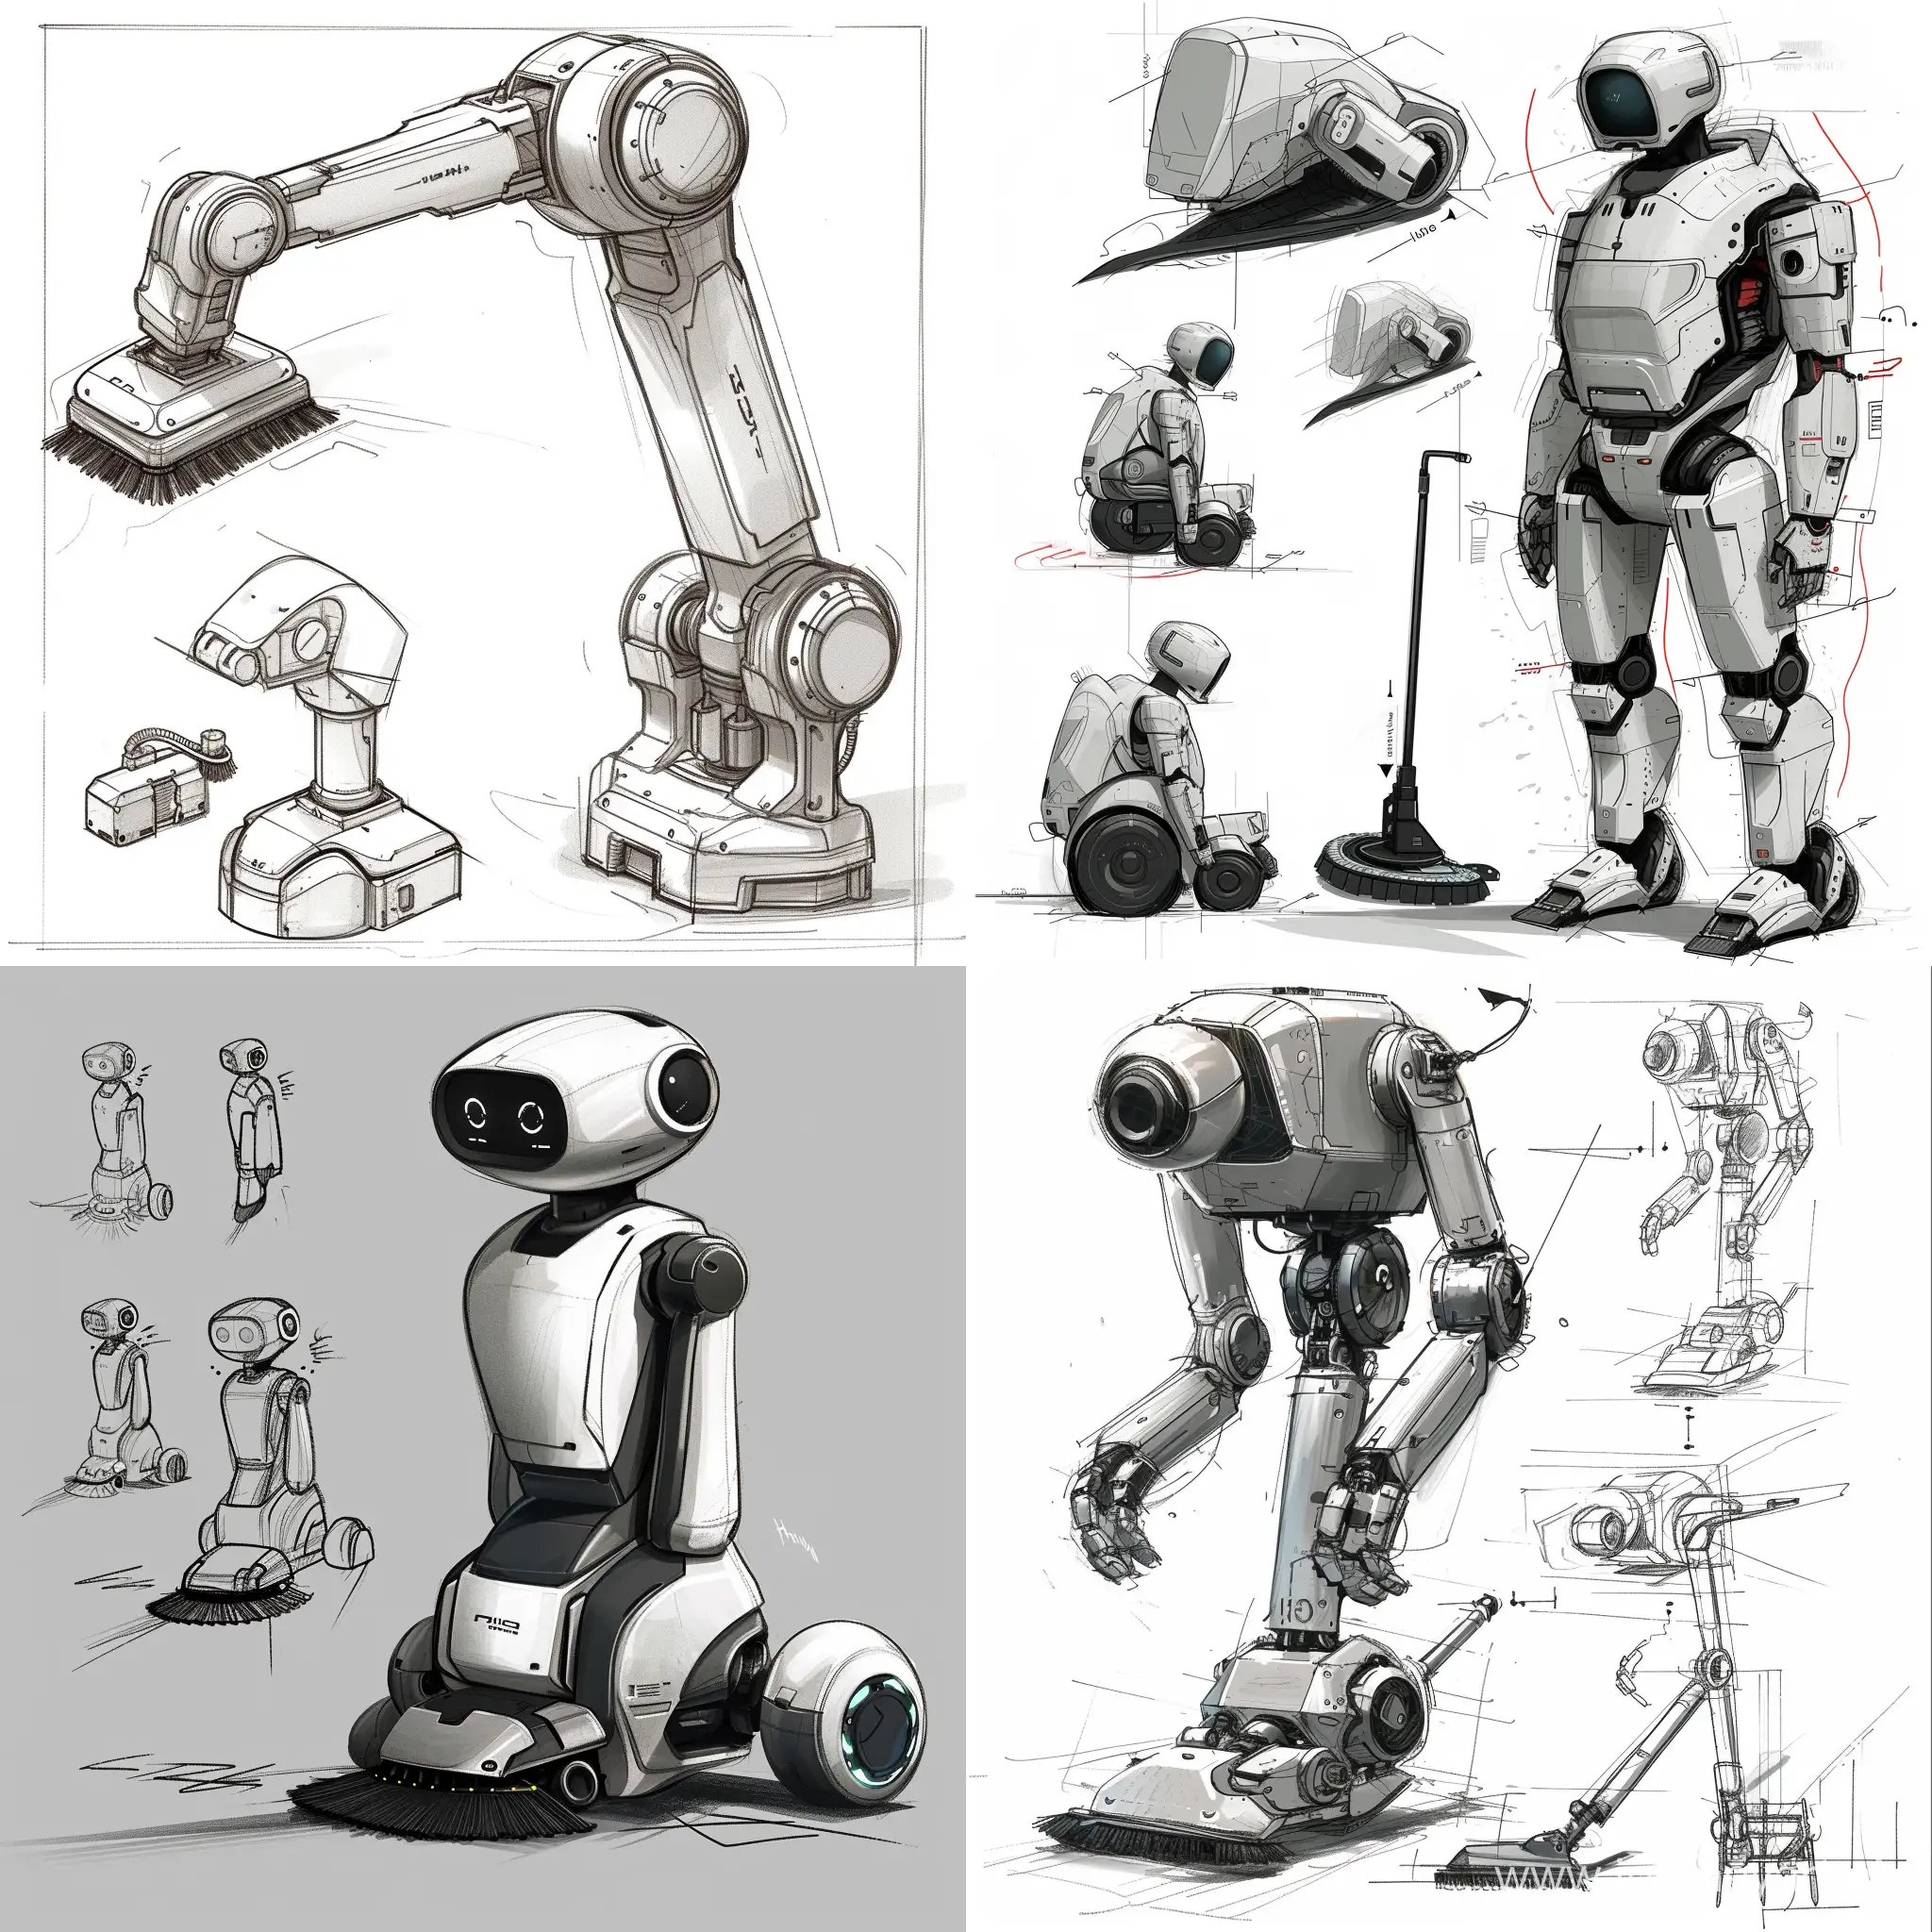 Smart-Autonomous-Sweeper-Robot-Design-Sketch